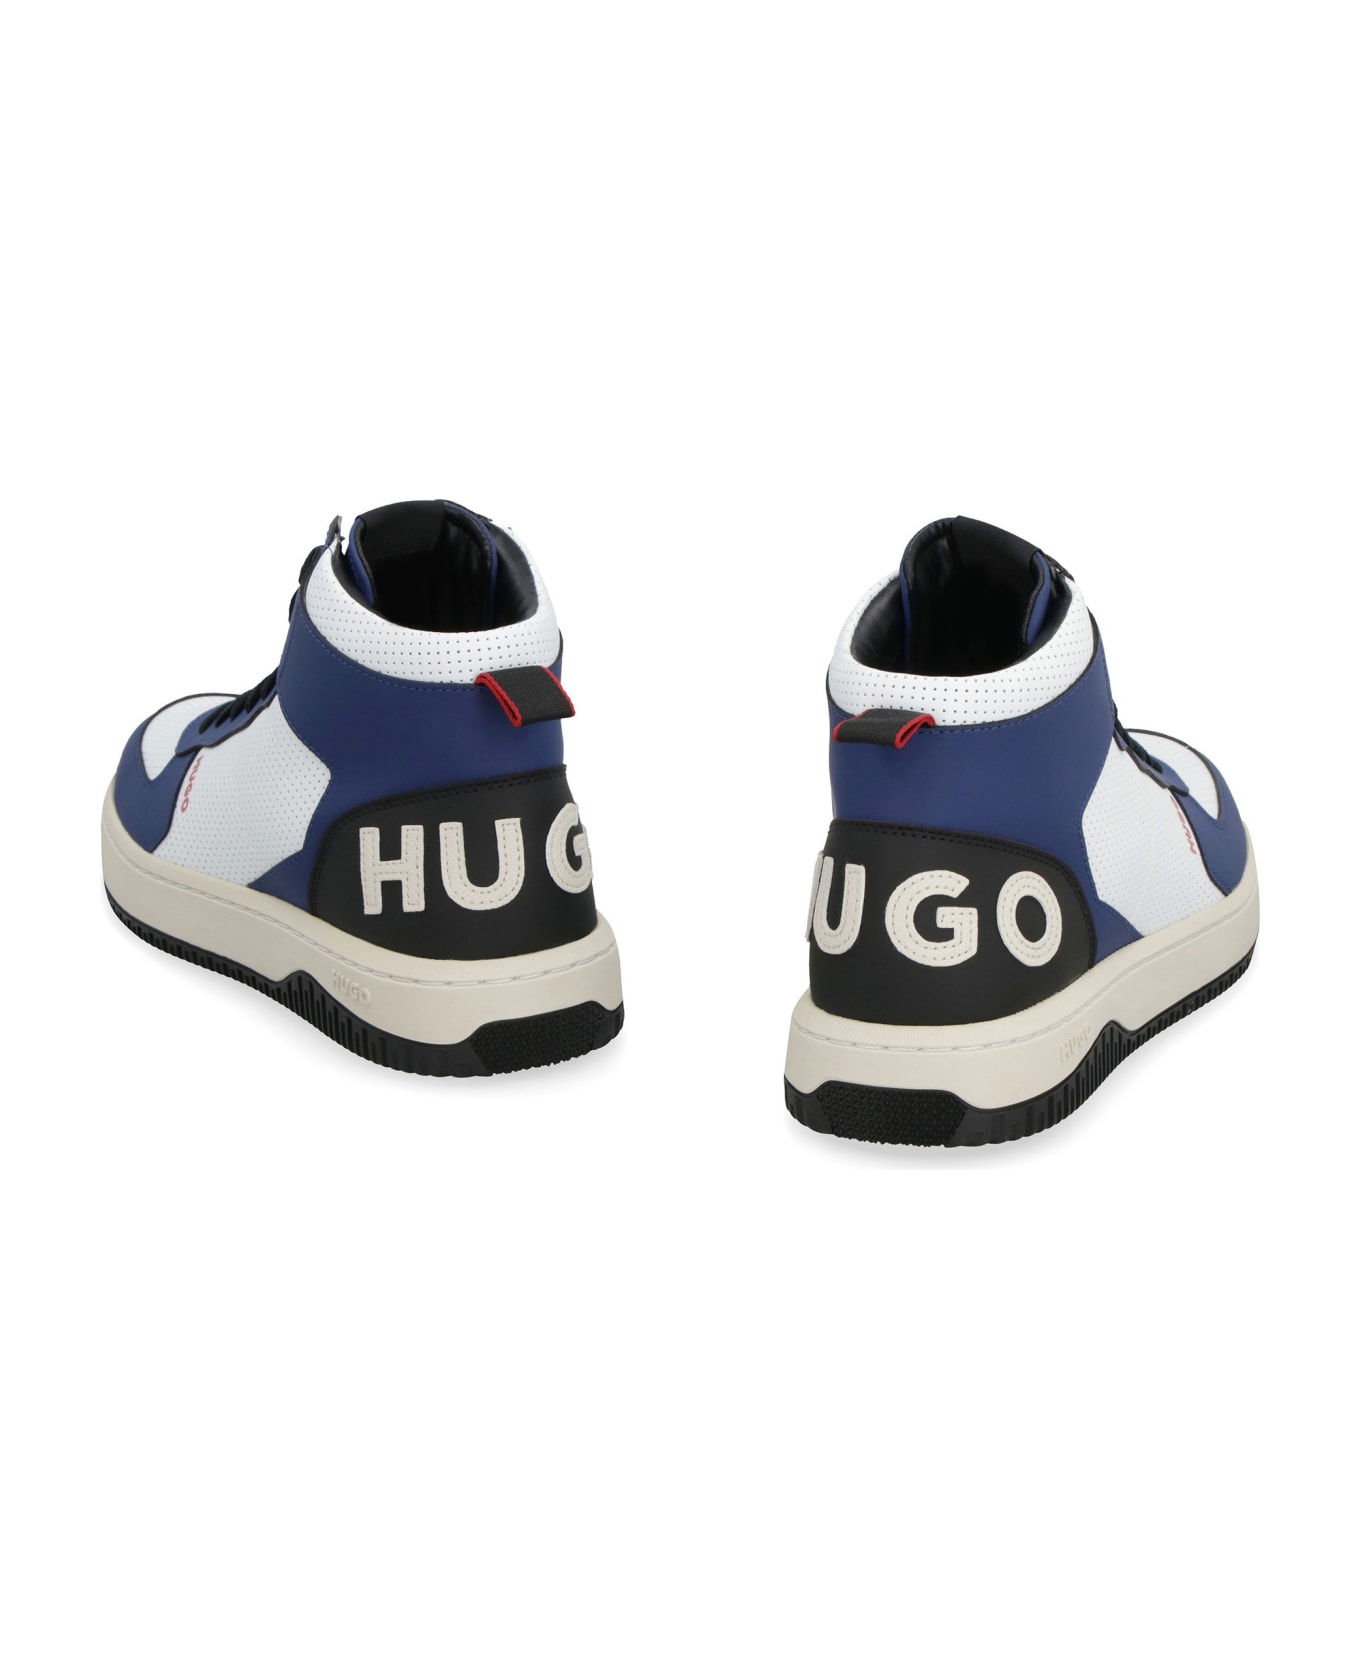 Hugo Boss Kilian High-top Sneakers - blue